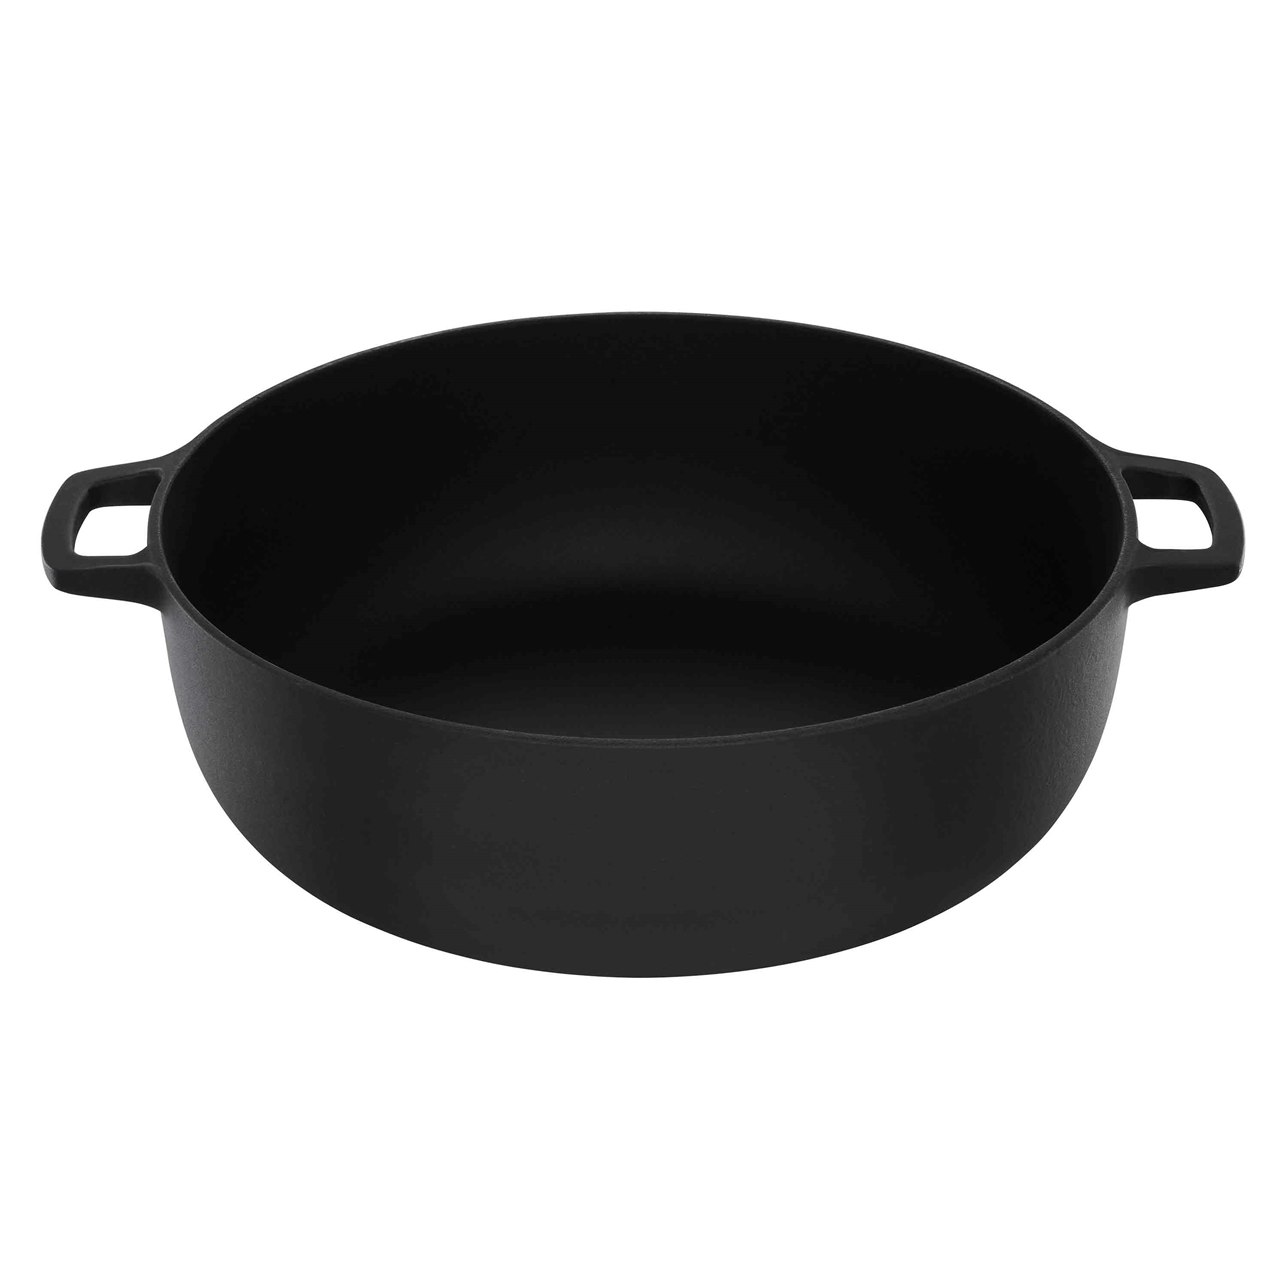 https://royaldesign.com/image/2/fiskars-norden-grill-chef-cast-iron-pot-30-cm-1?w=800&quality=80